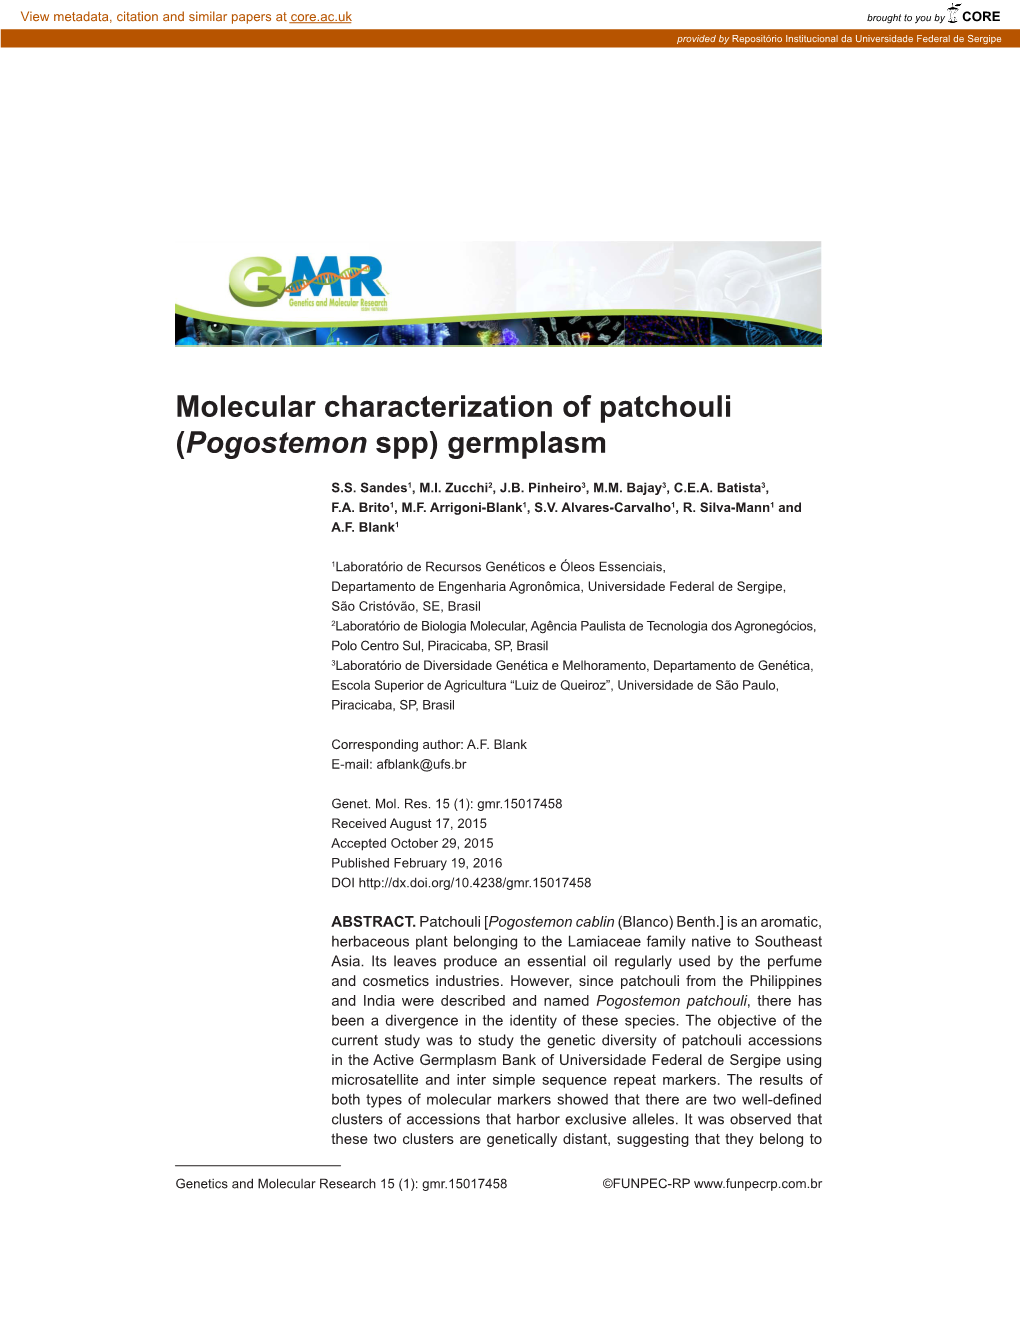 Molecular Characterization of Patchouli (Pogostemon Spp) Germplasm